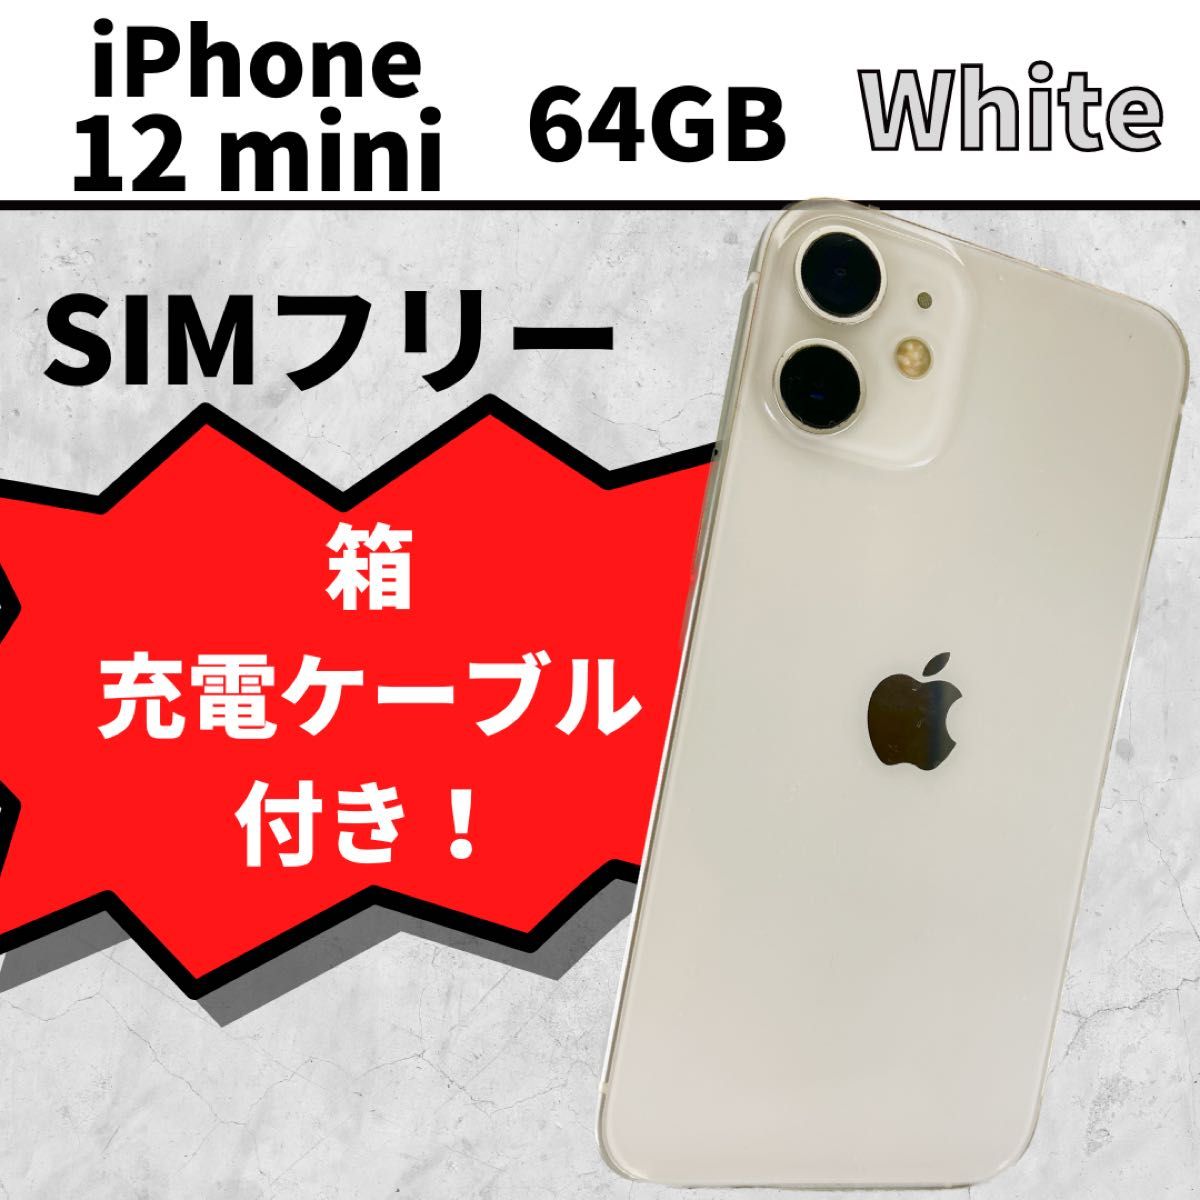 iPhone12 mini 64GB ホワイト 今日限定激安価格-